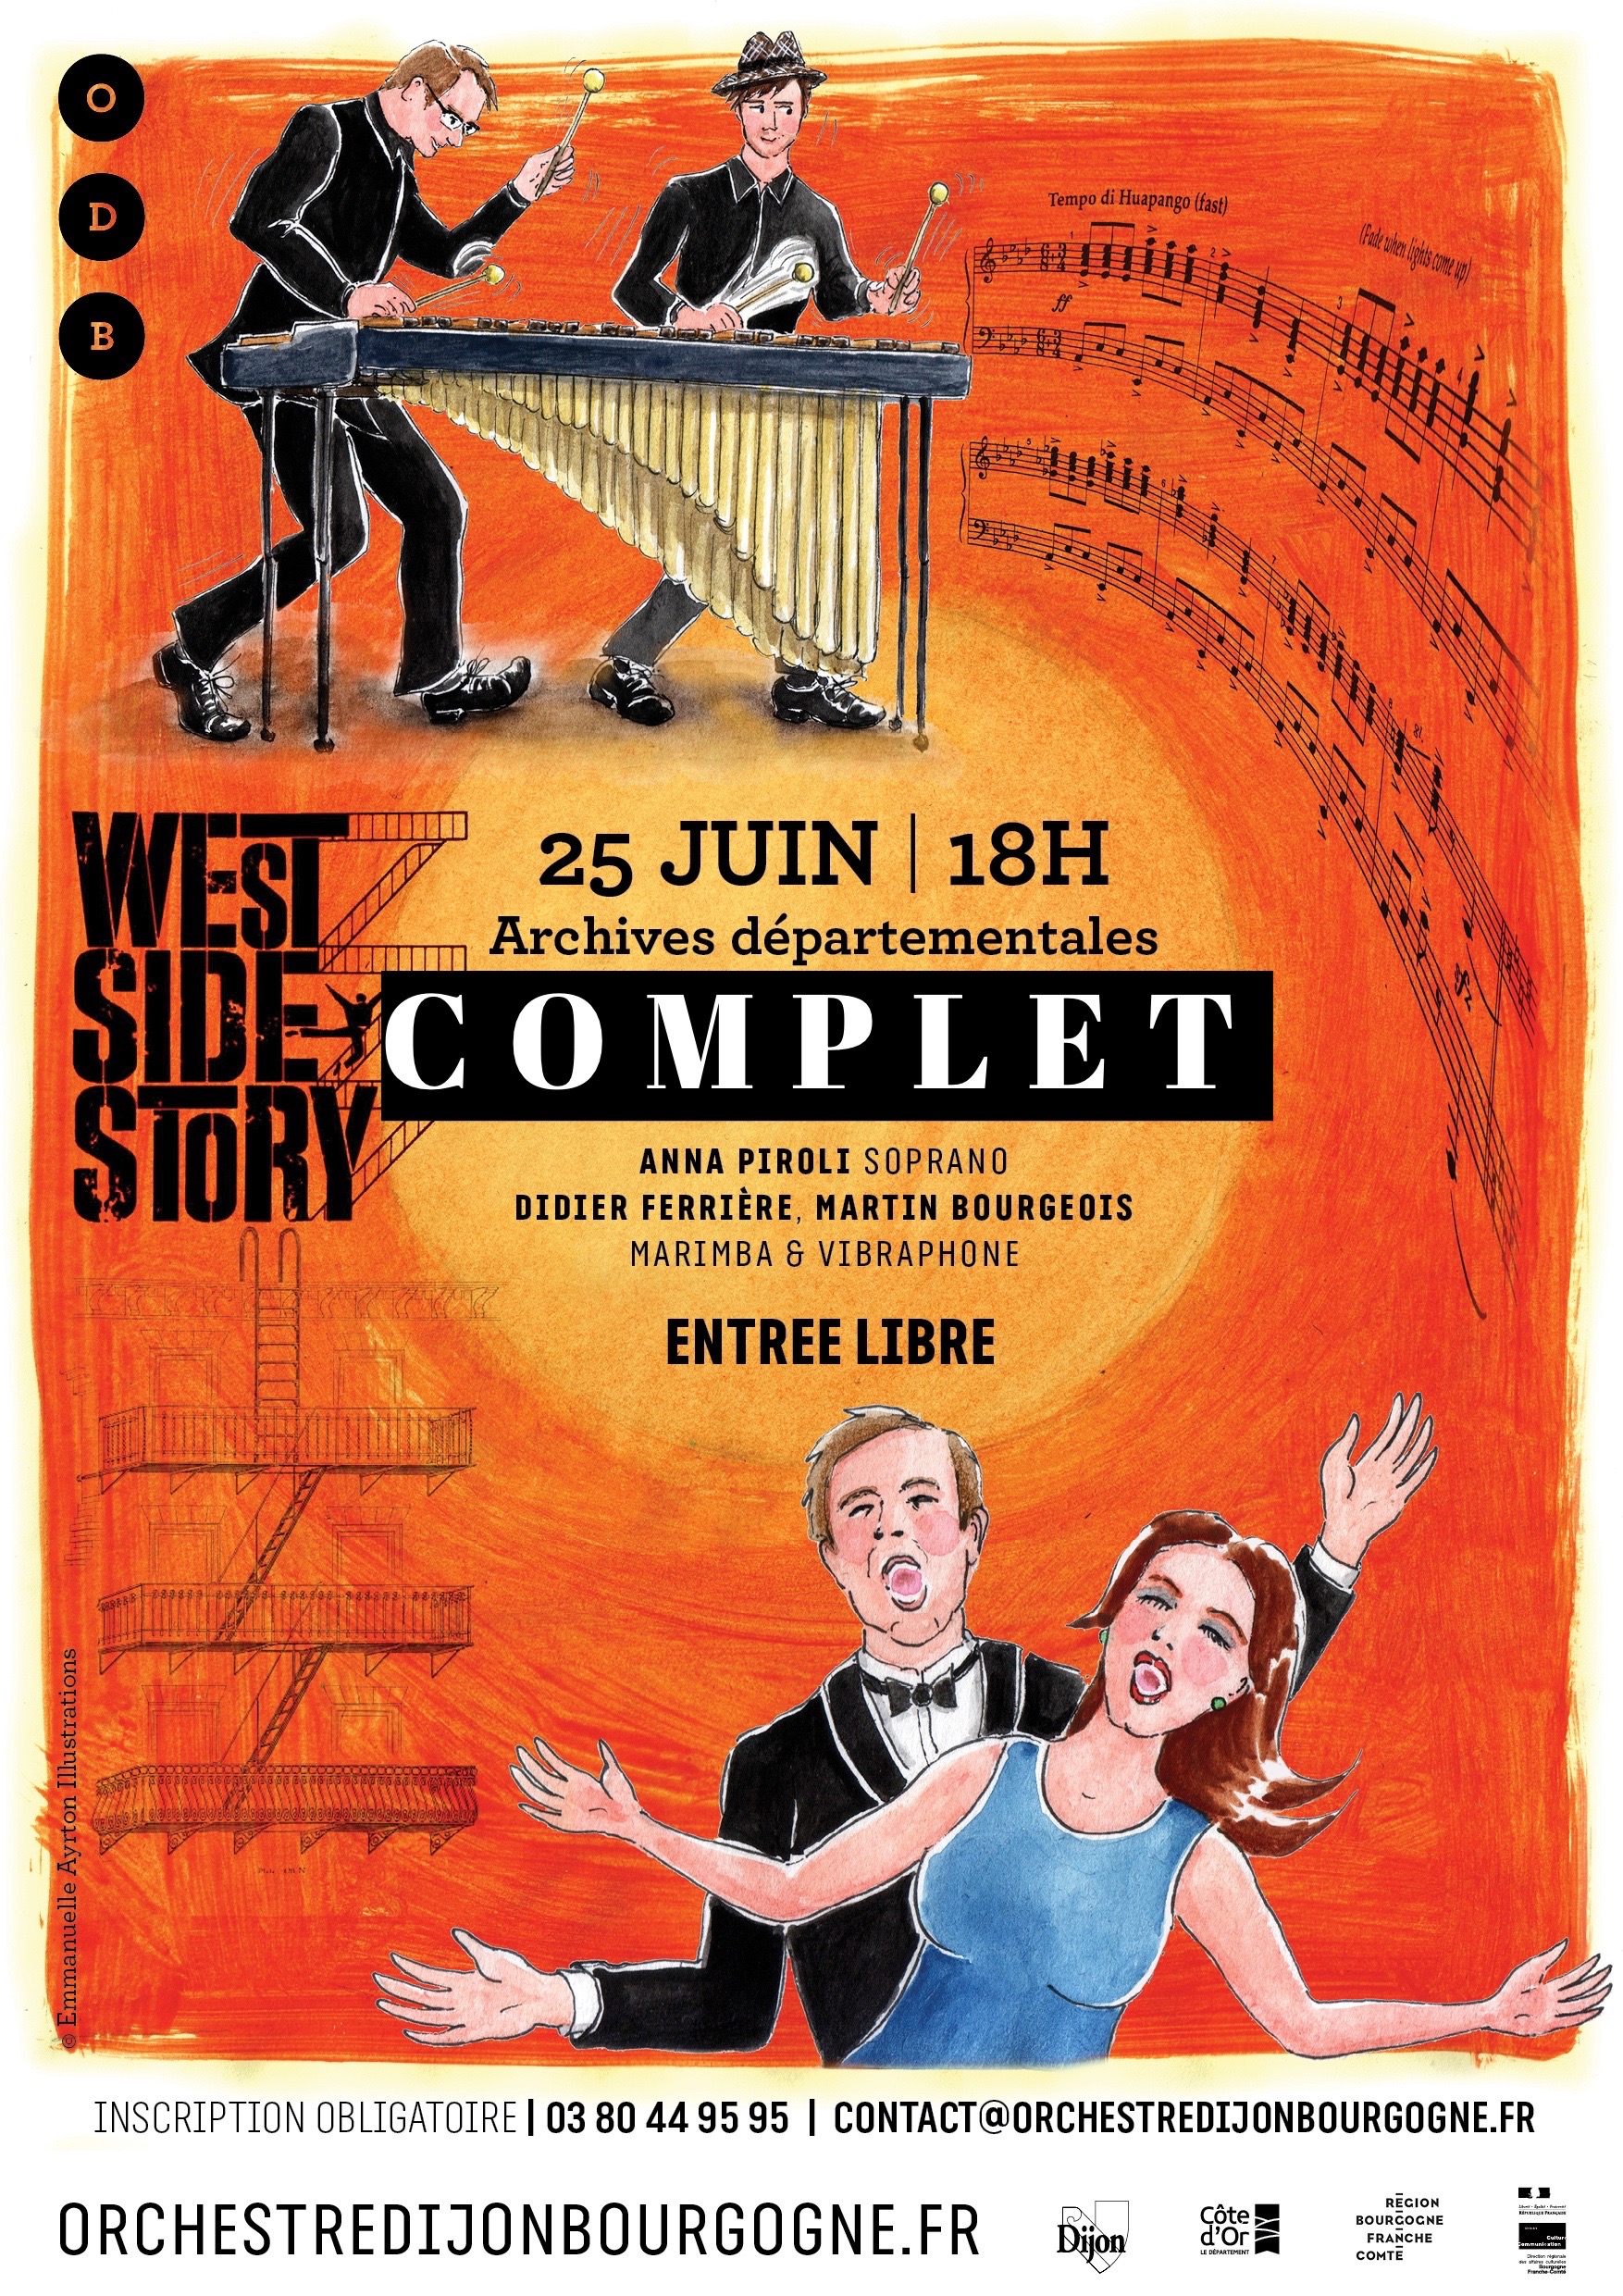 West side story - complet - Orchestre Dijon Bourgogne